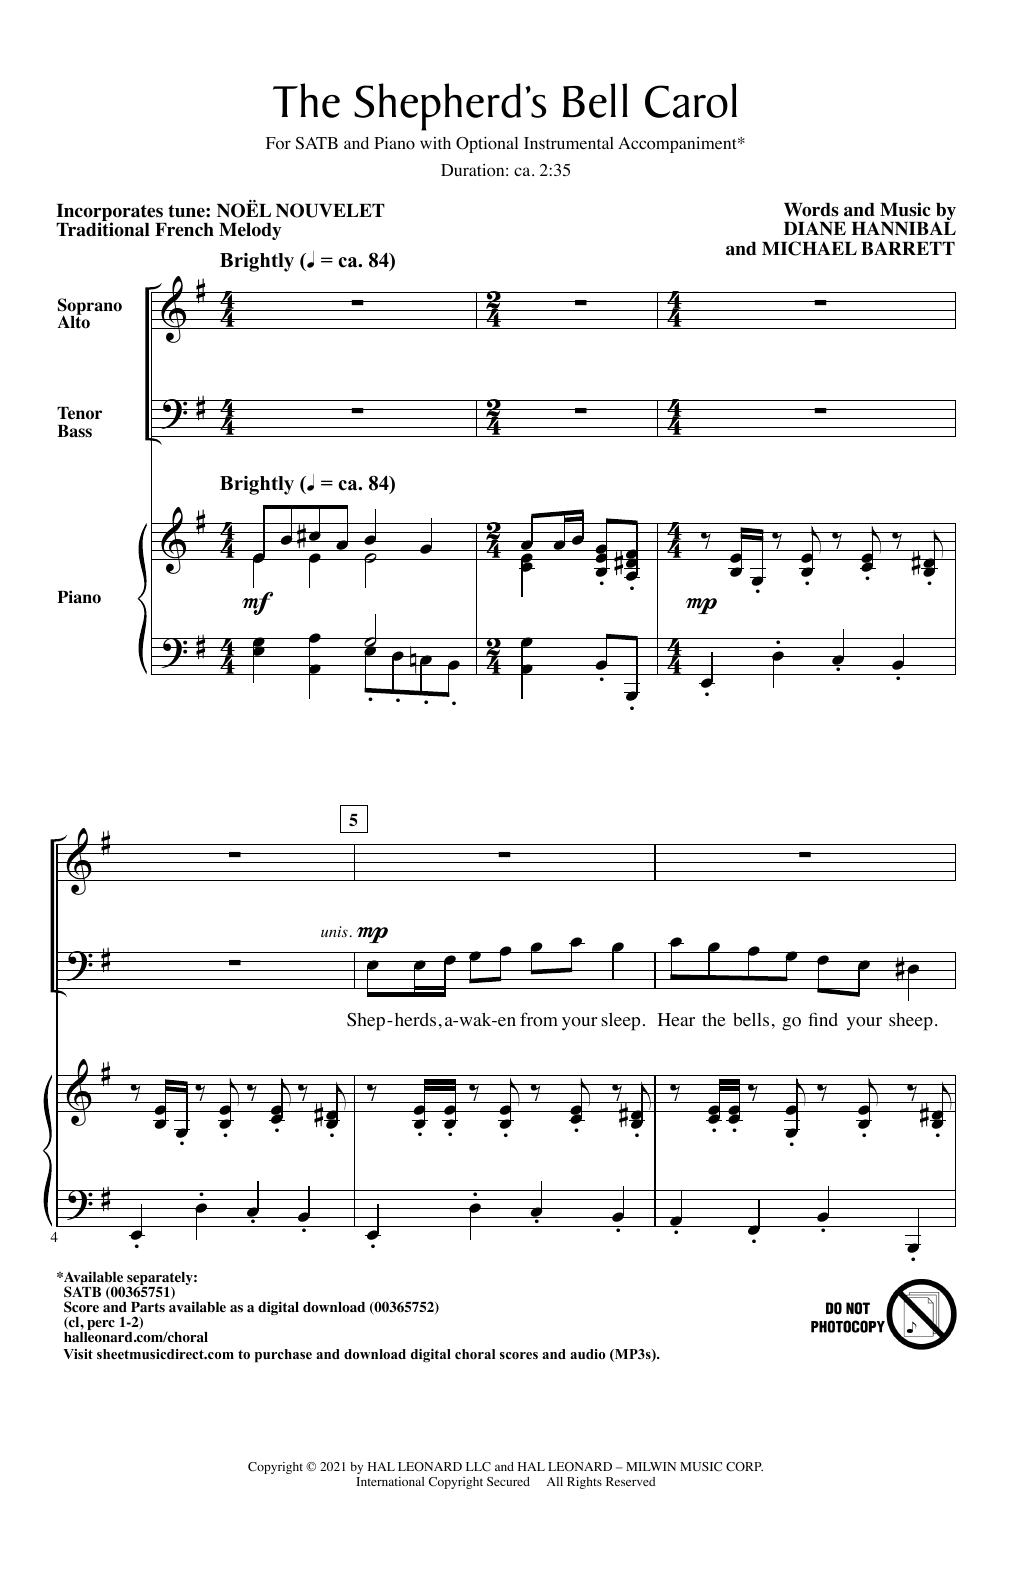 Diane Hannibal and Michael Barrett The Shepherd's Bell Carol Sheet Music Notes & Chords for SATB Choir - Download or Print PDF